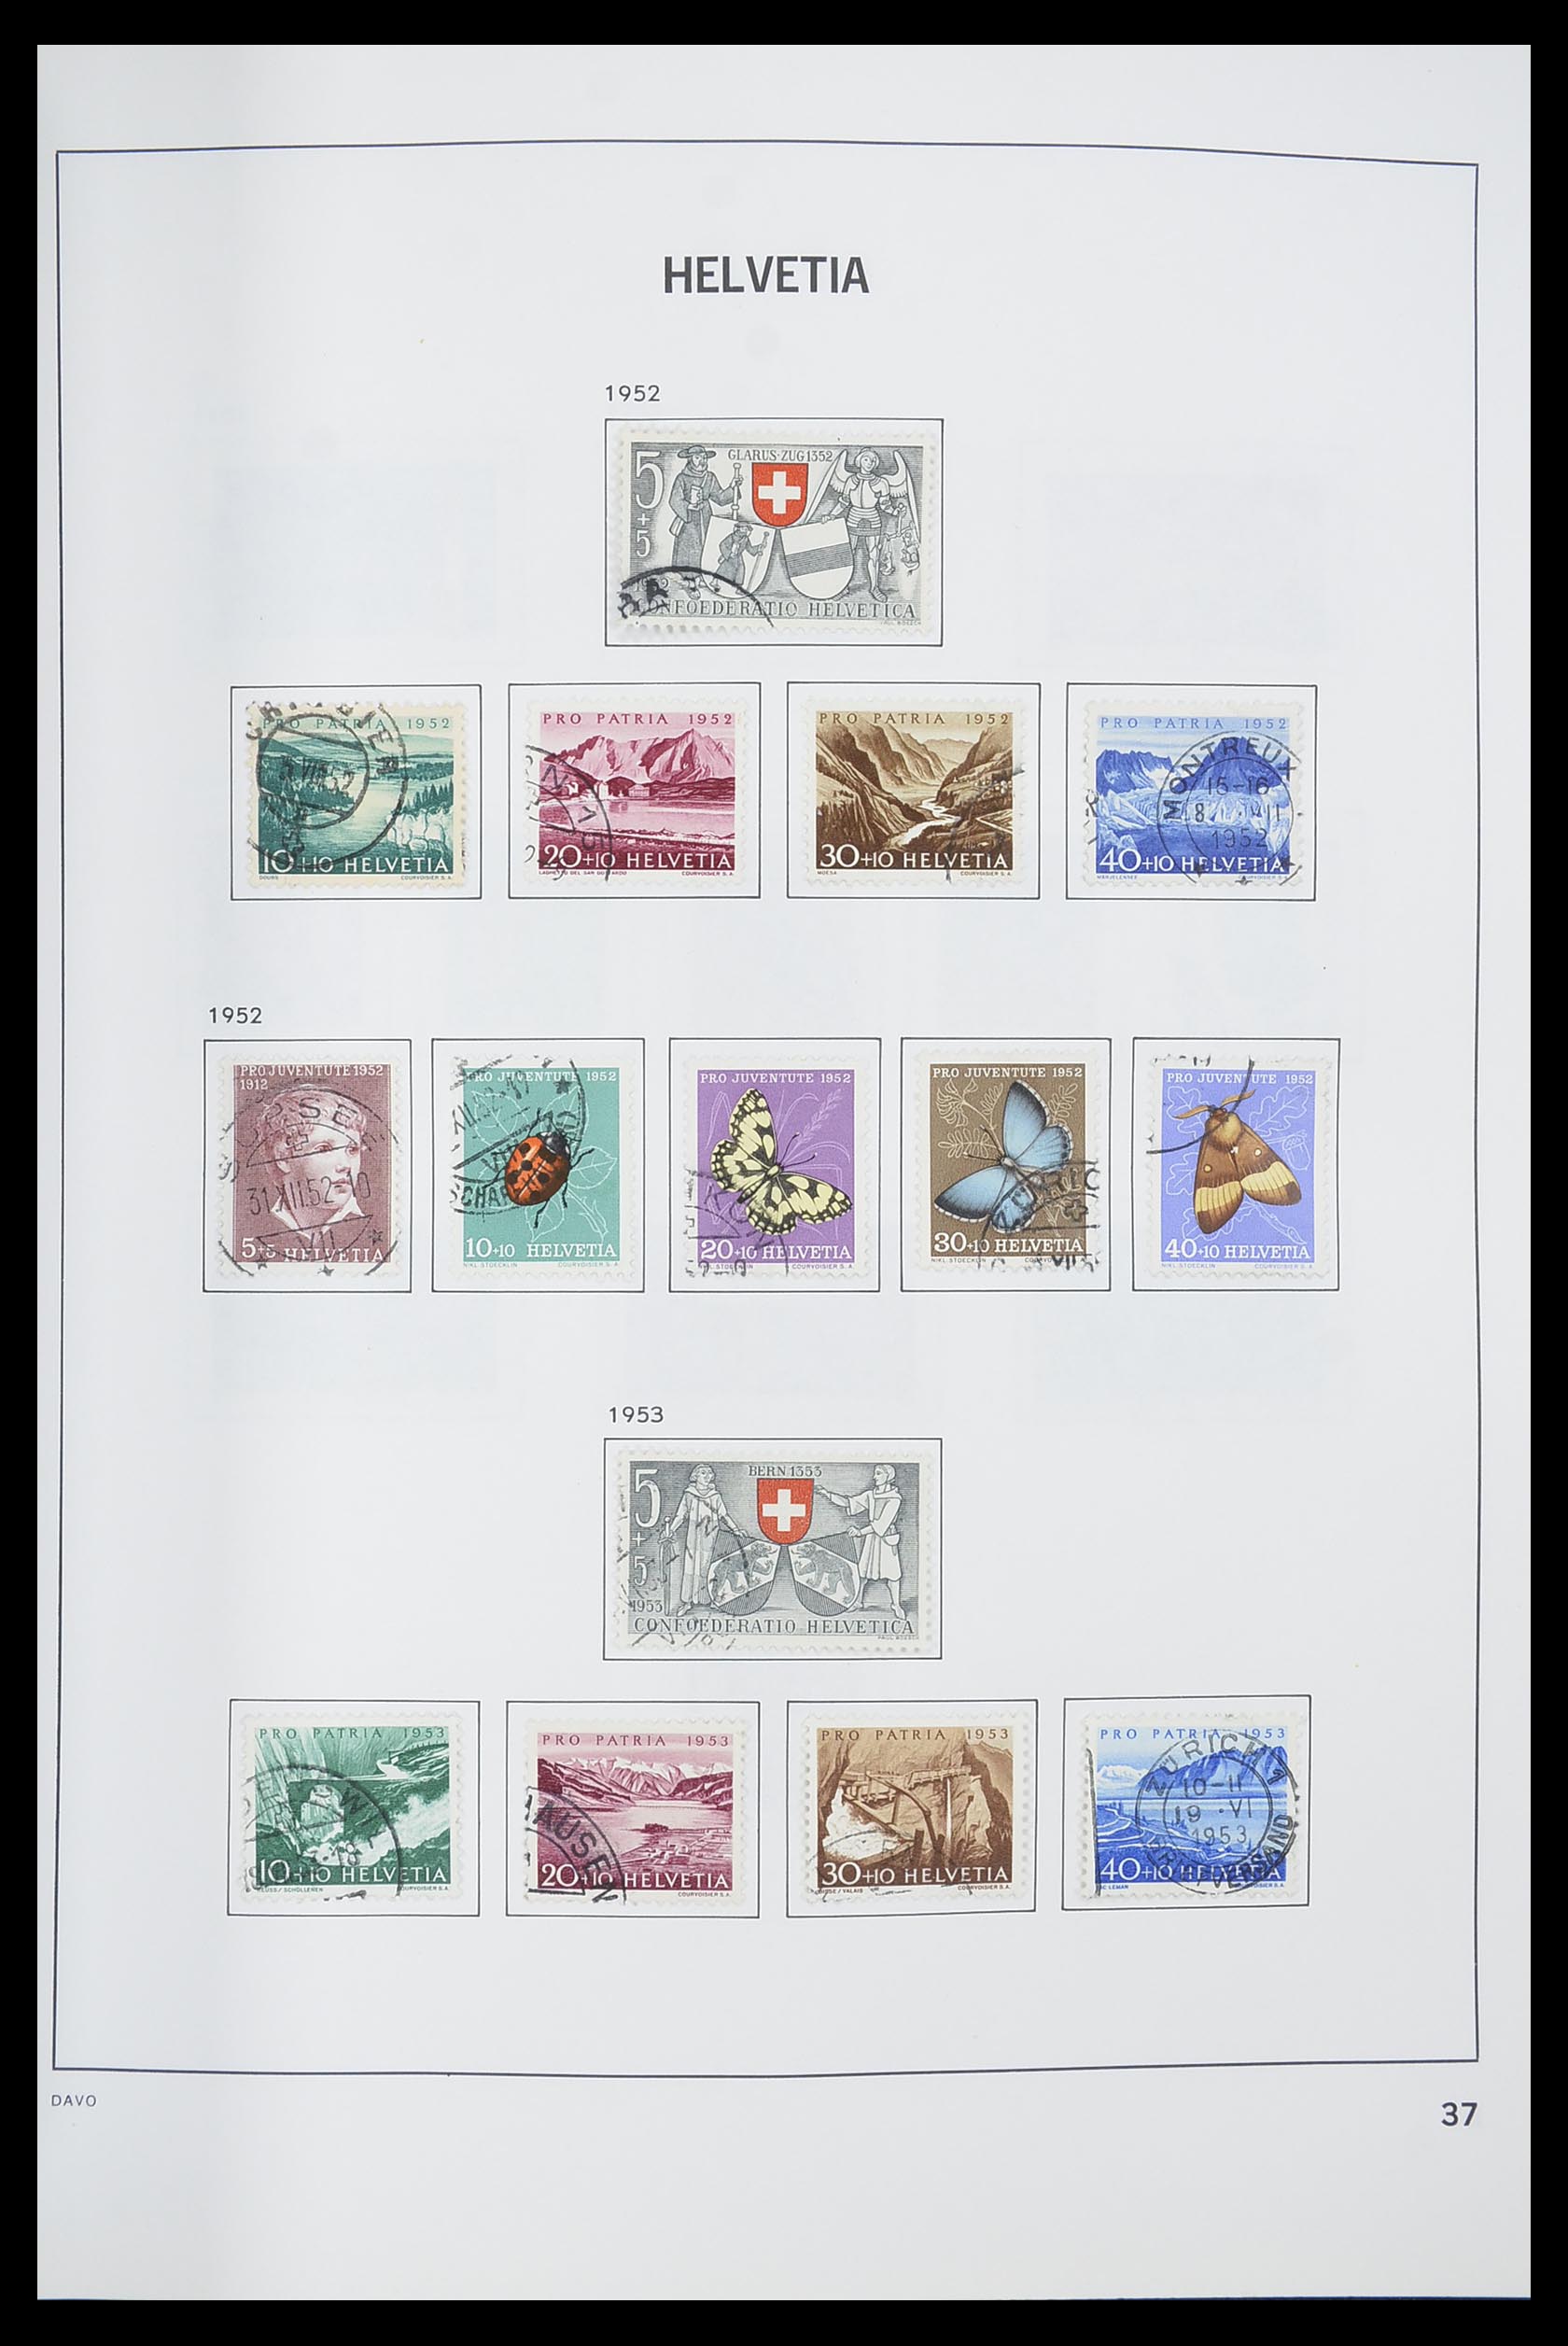 33559 038 - Stamp collection 33559 Switzerland 1850-2000.